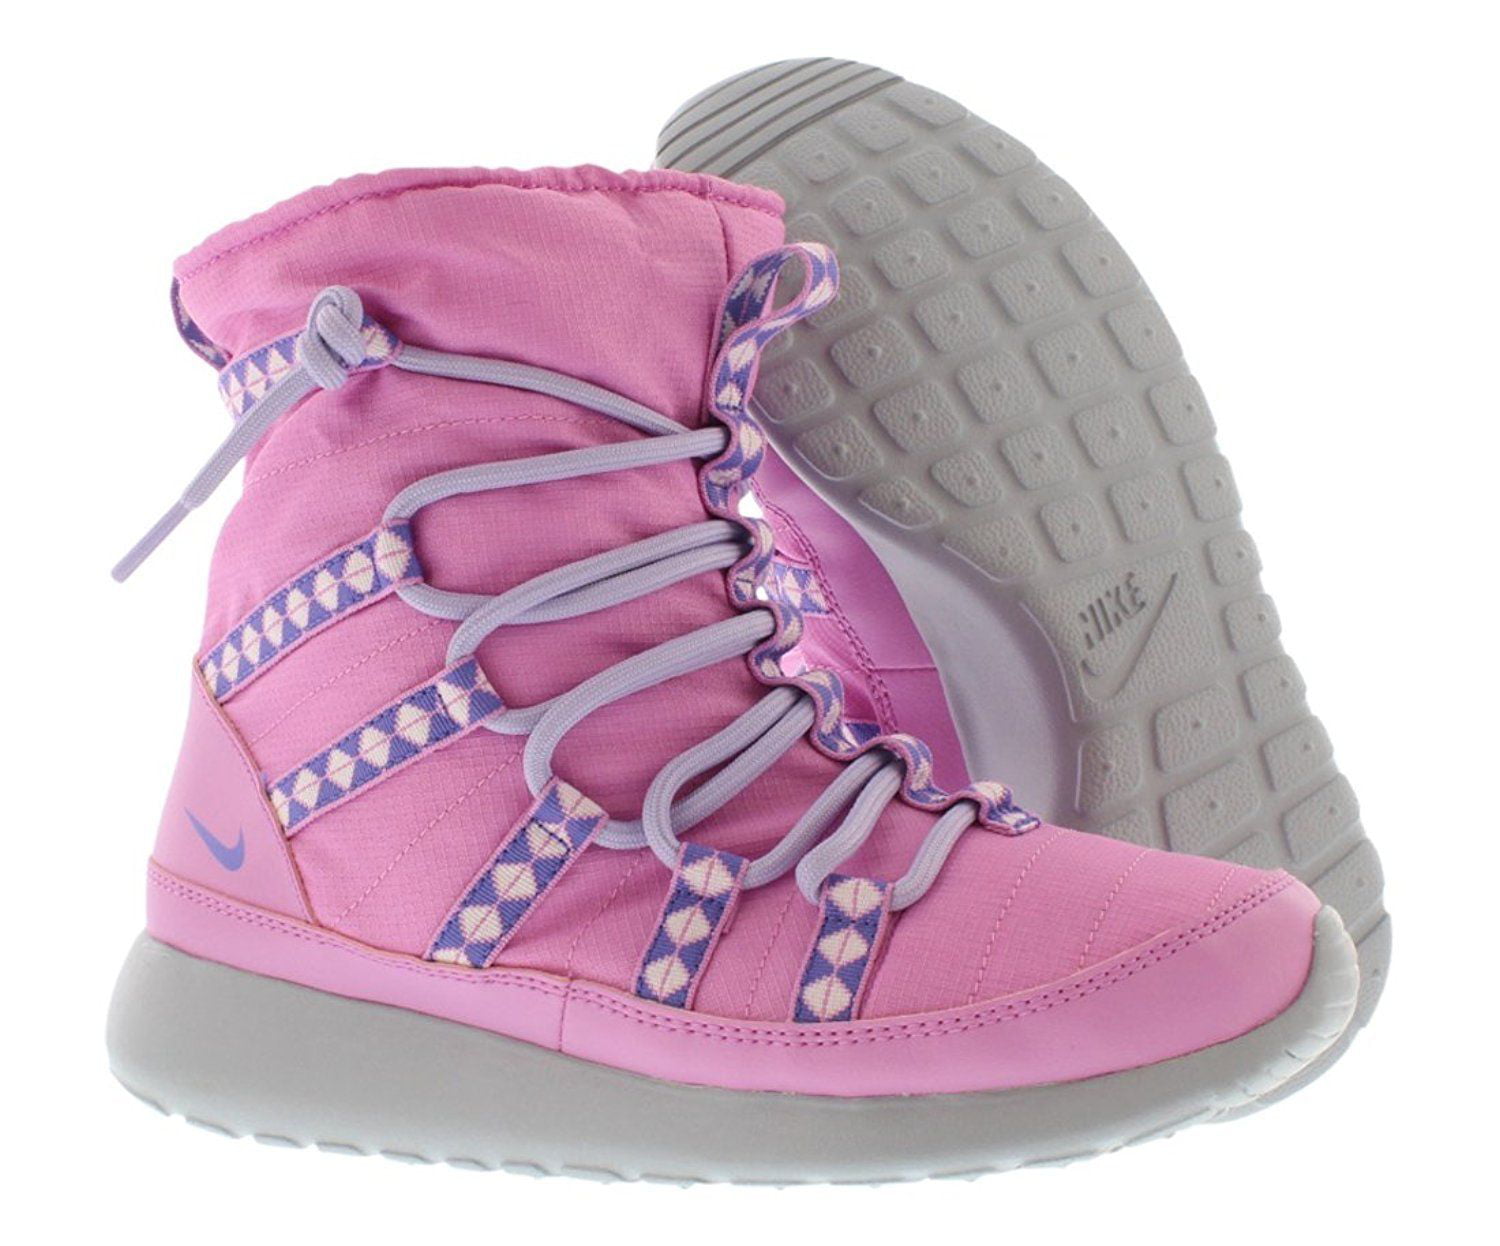 Nike Roshe Run Sneaker Boot 654492 SIZE 5.5 YOUTH Retail $85 New - Walmart.com